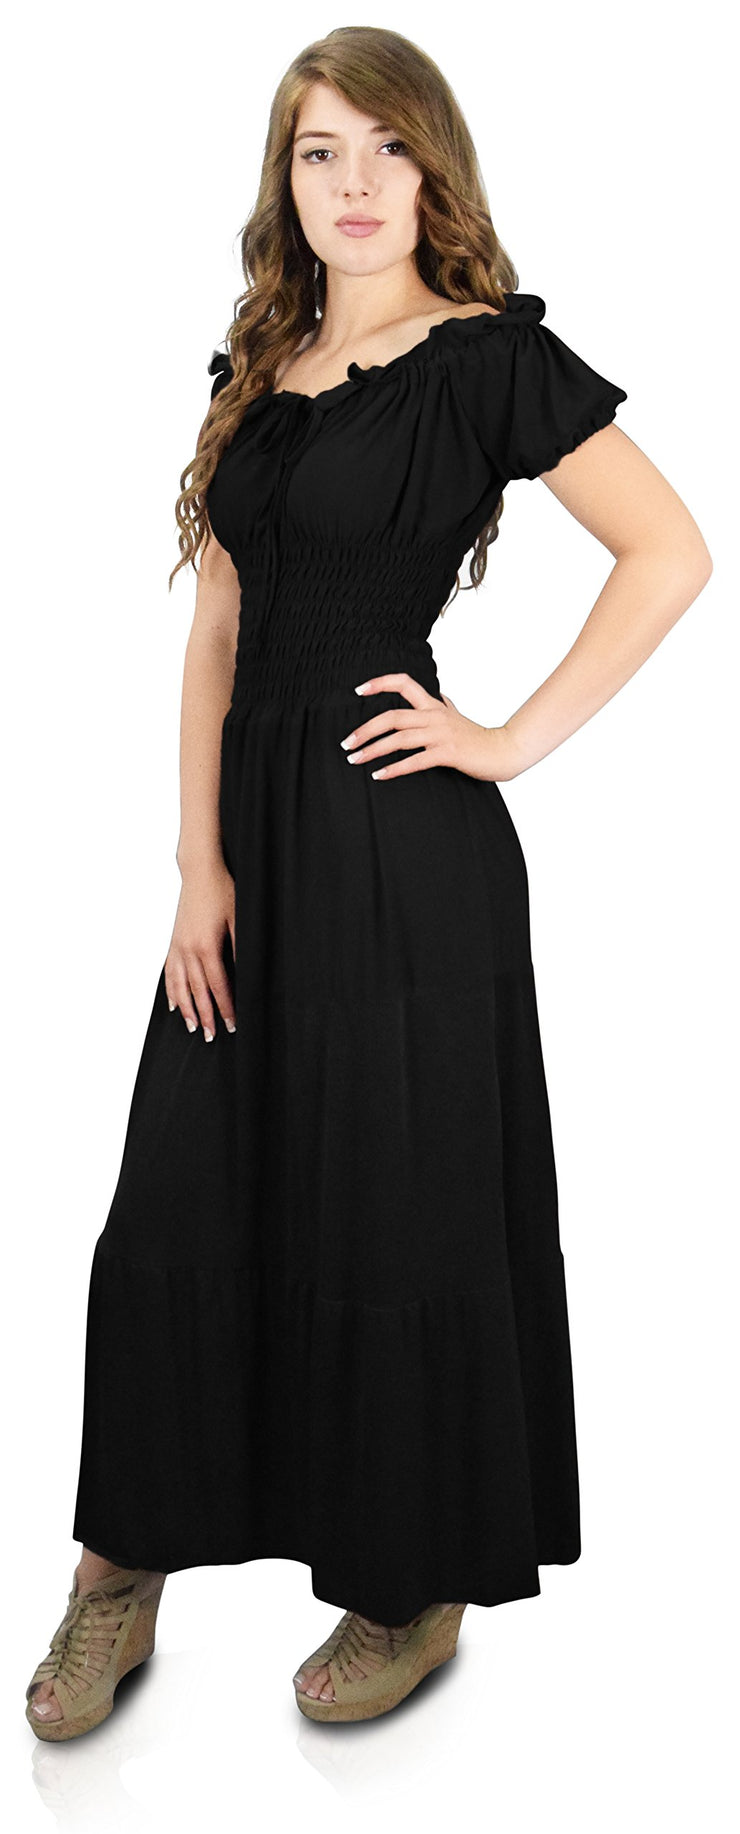 Peach Couture Gypsy Boho Cap Sleeves Smocked Waist Tiered Renaissance Maxi Dress Black, XL